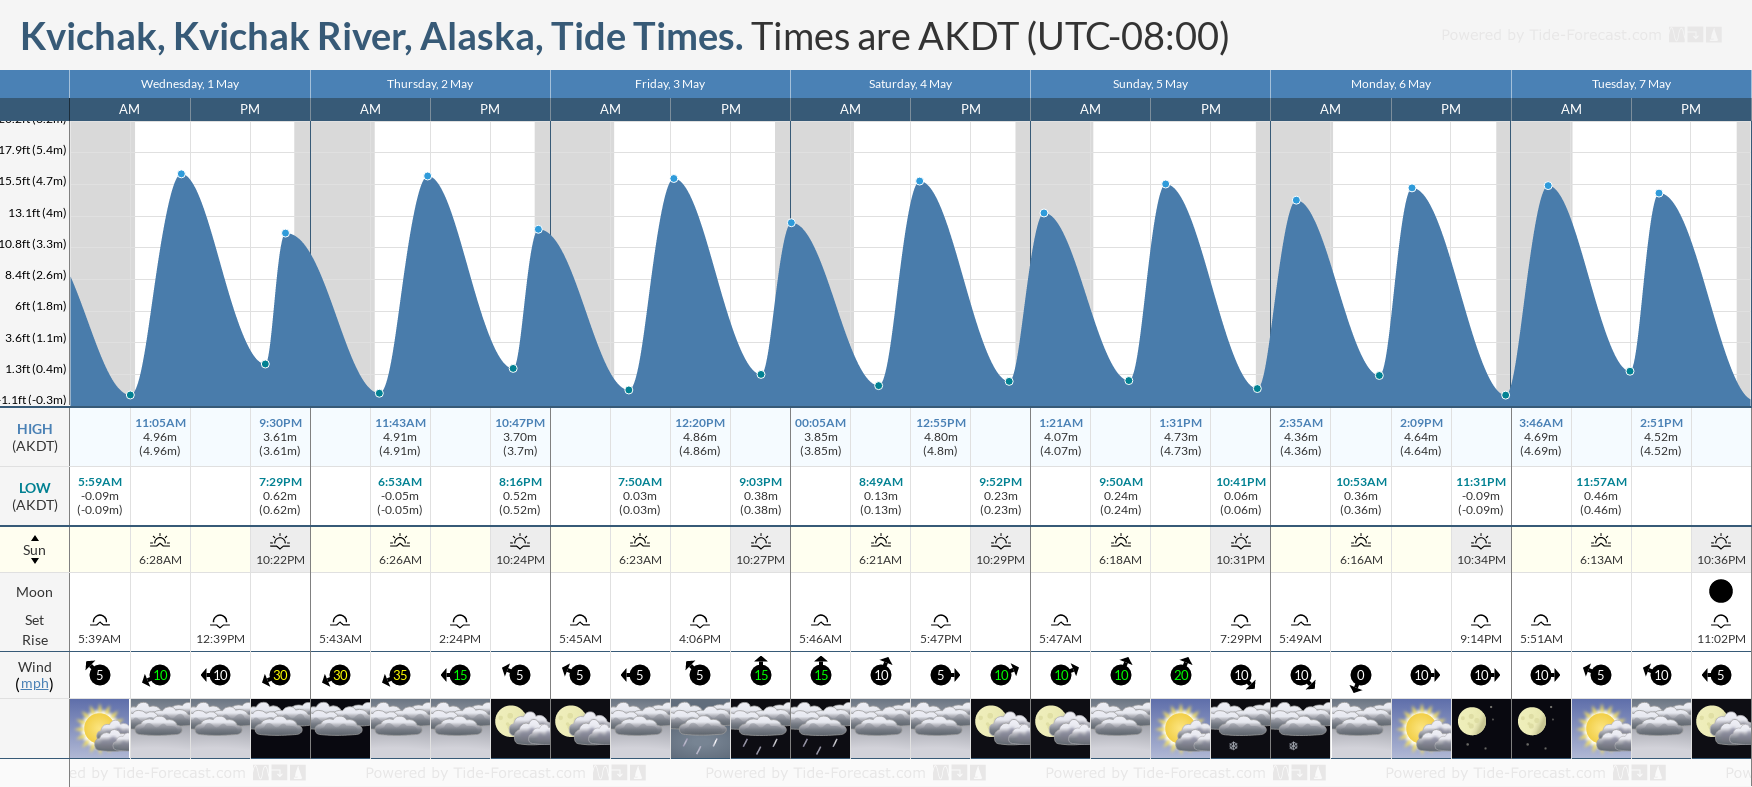 Kvichak, Kvichak River, Alaska Tide Chart including high and low tide times for the next 7 days